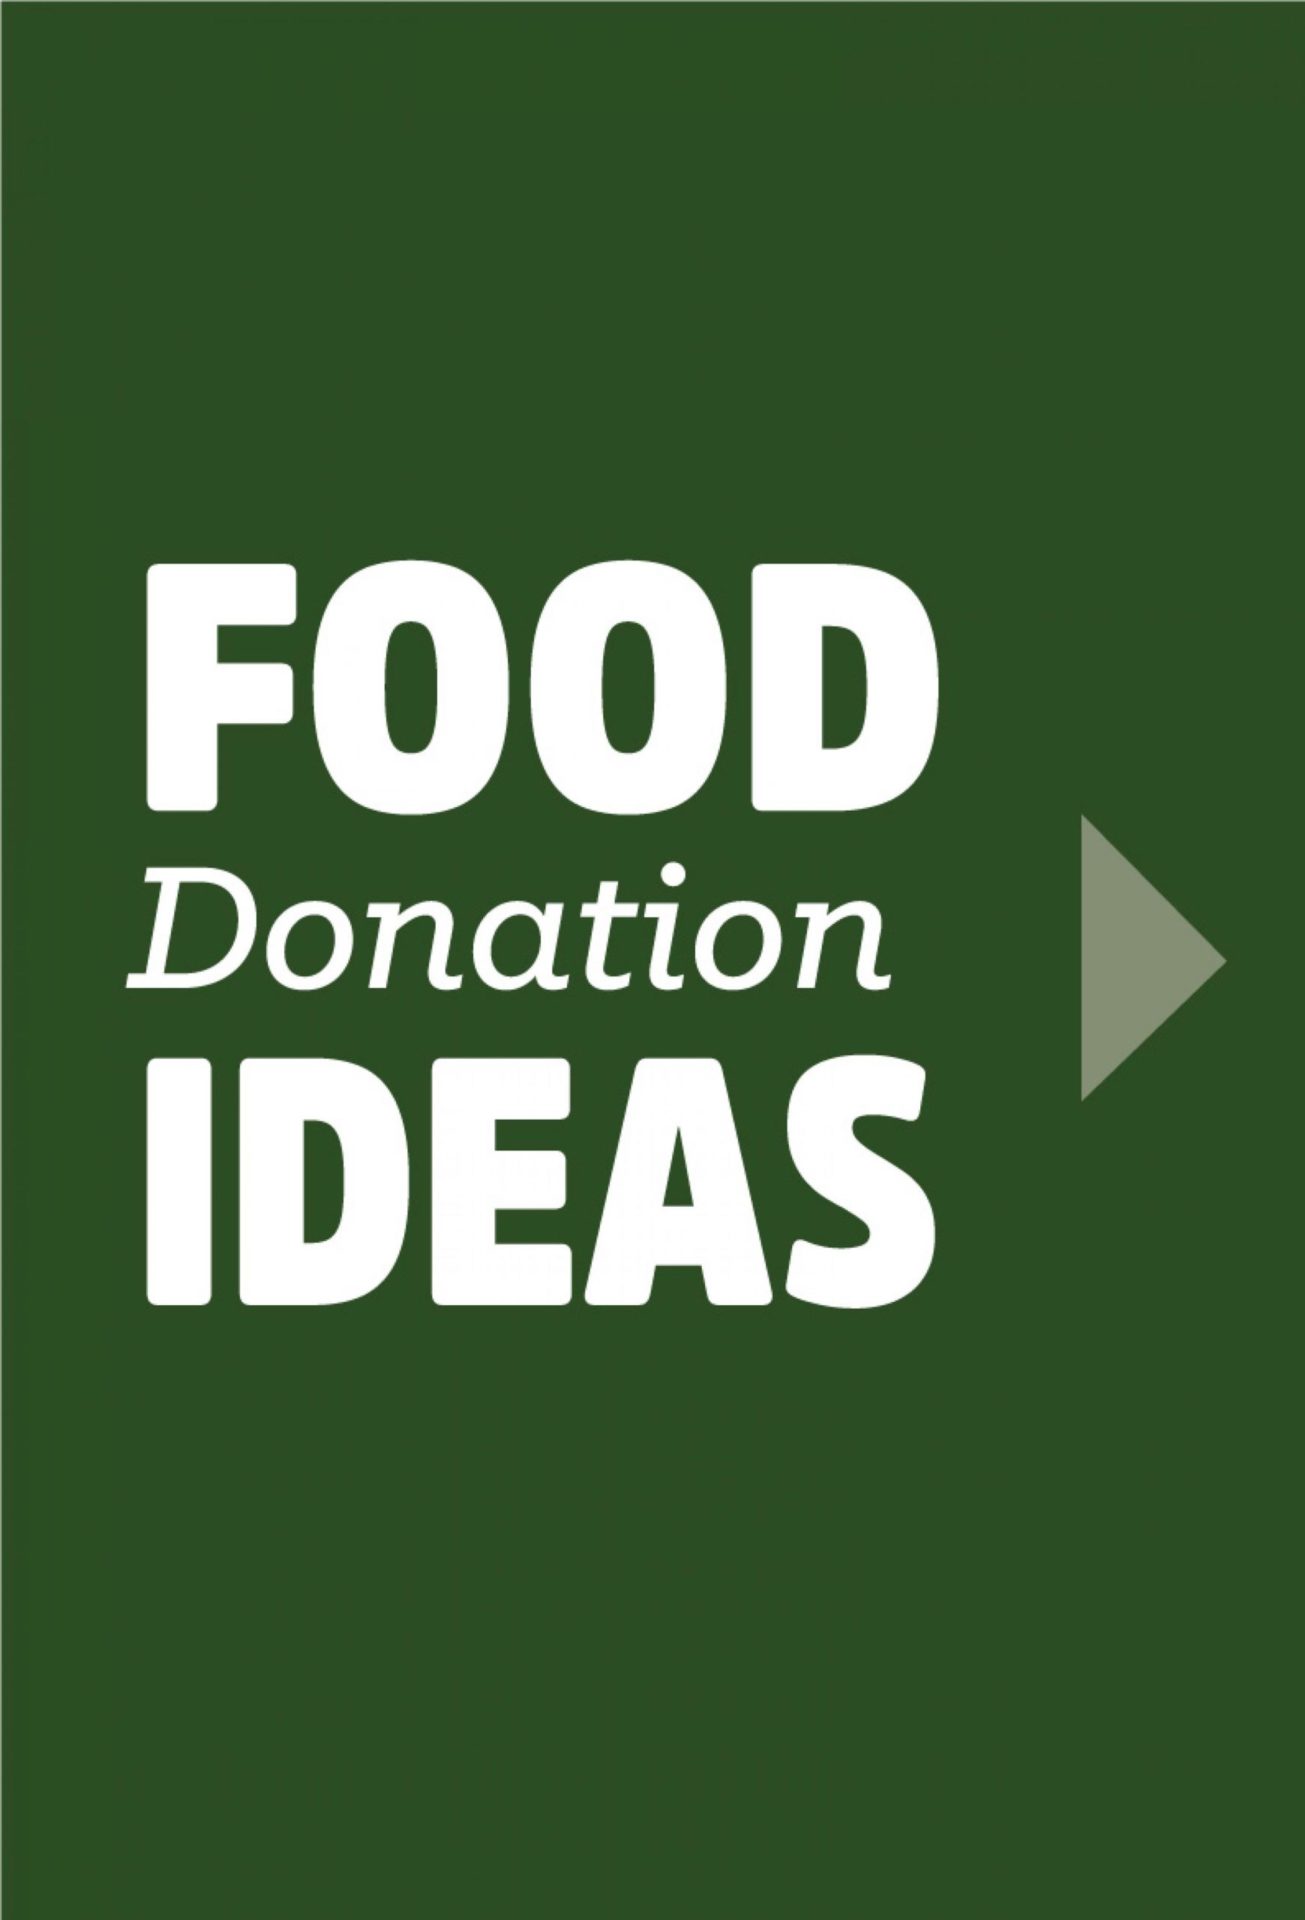 FOOD Donation IDEAS